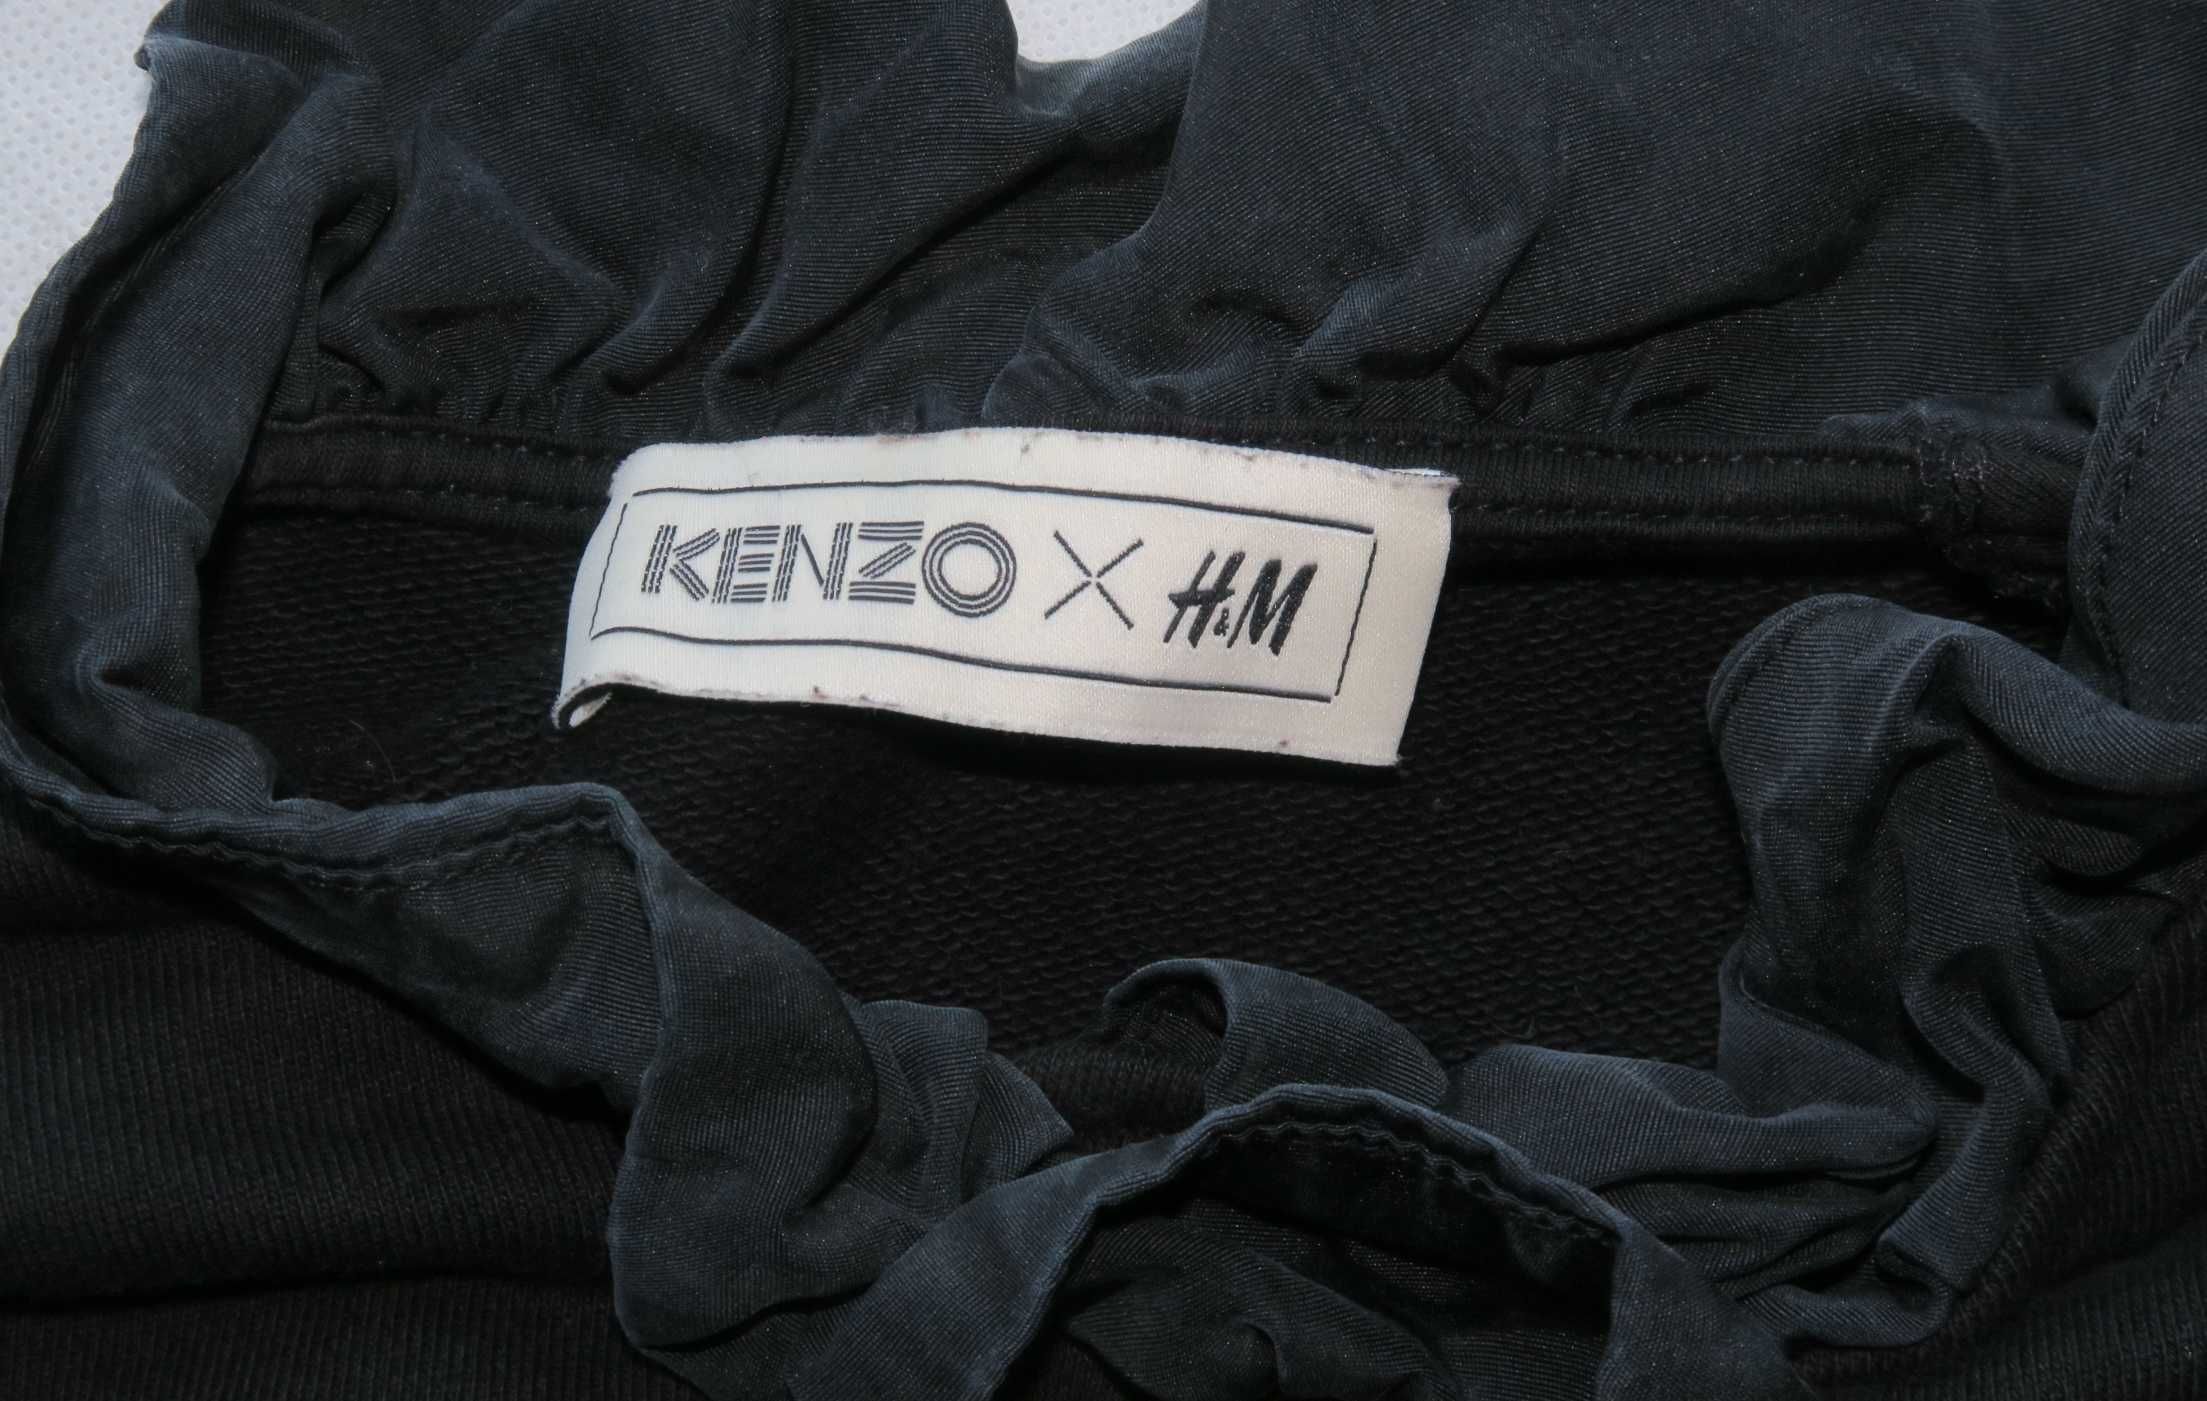 H&M x Kenzo bluza kolaboracja damska S